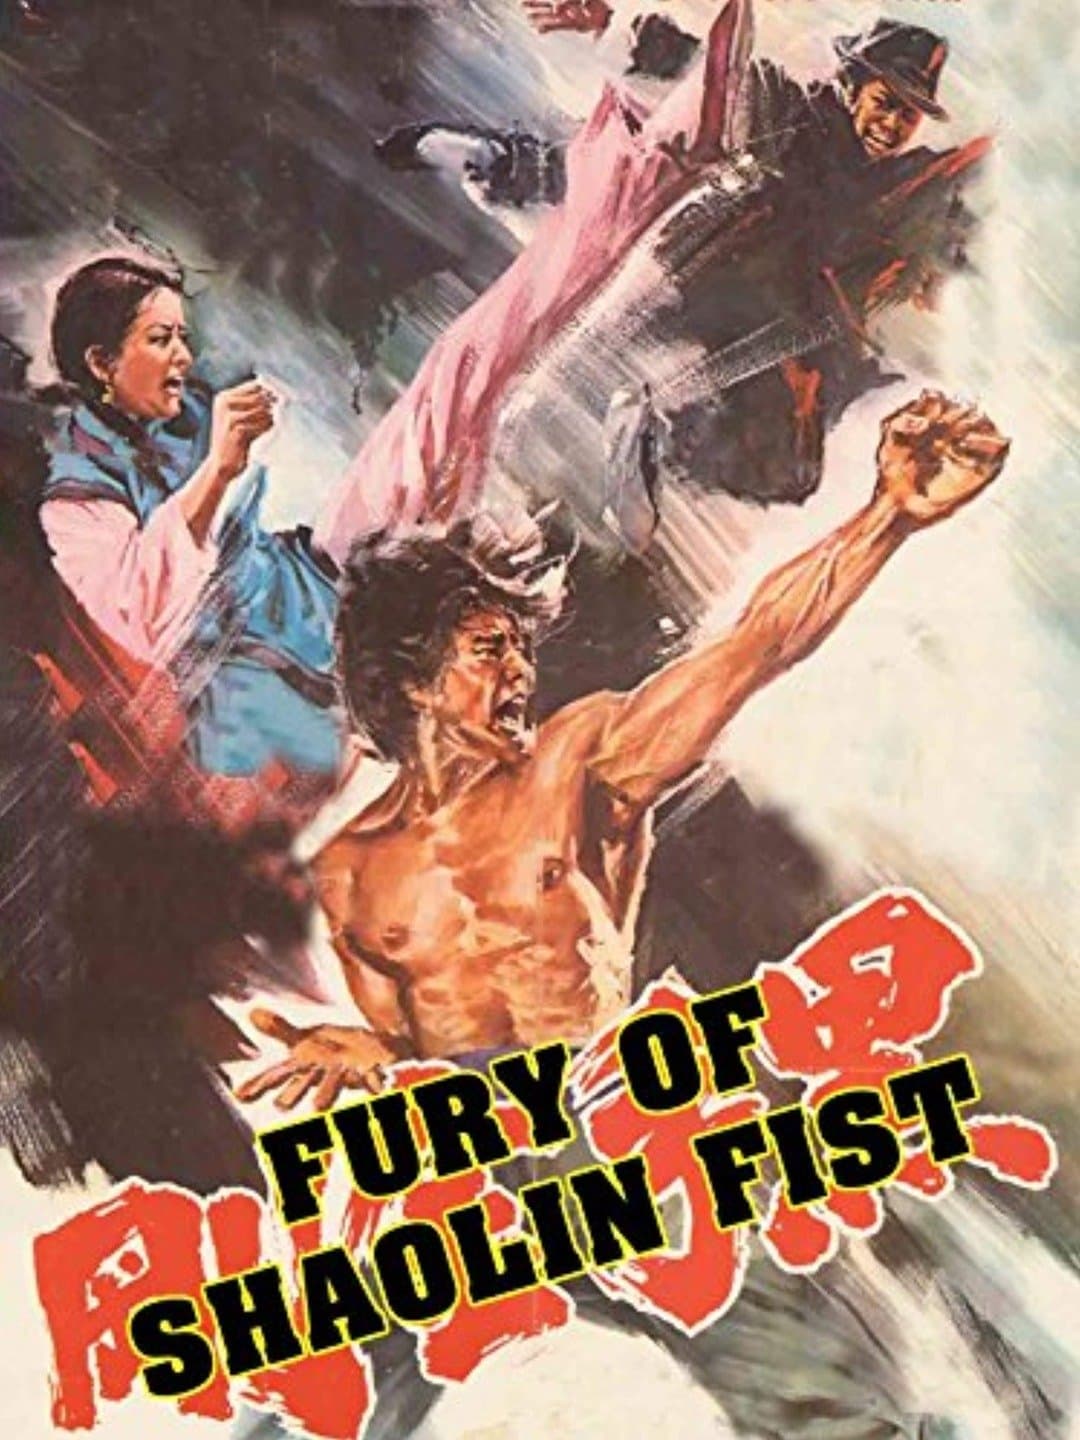 Fury of Shaolin Fist